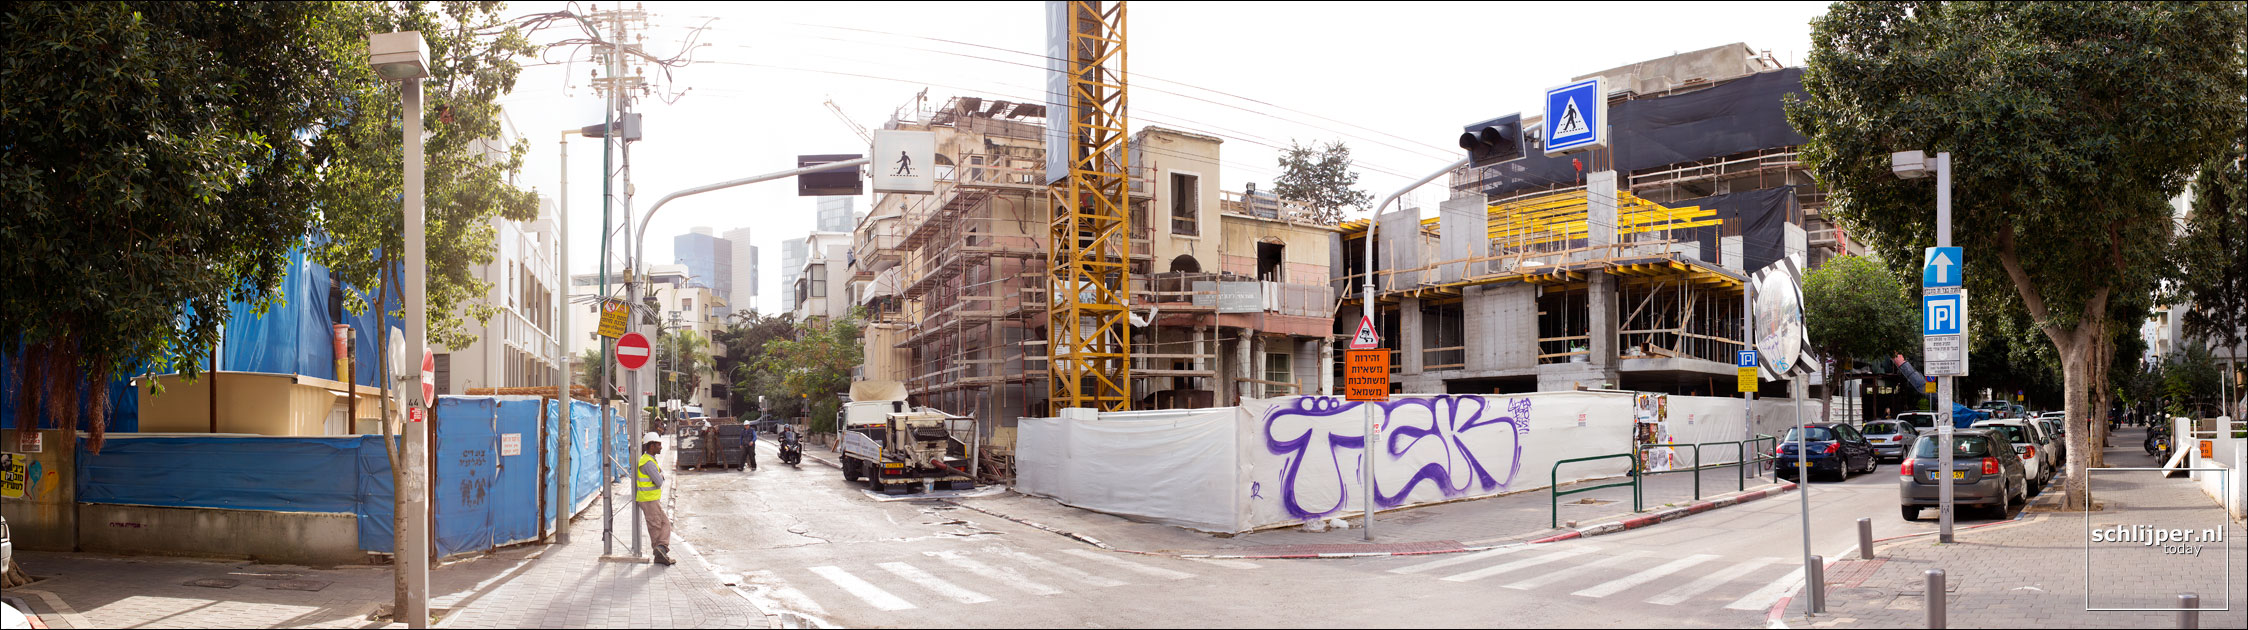 Israel, Tel Aviv, 6 januari 2013